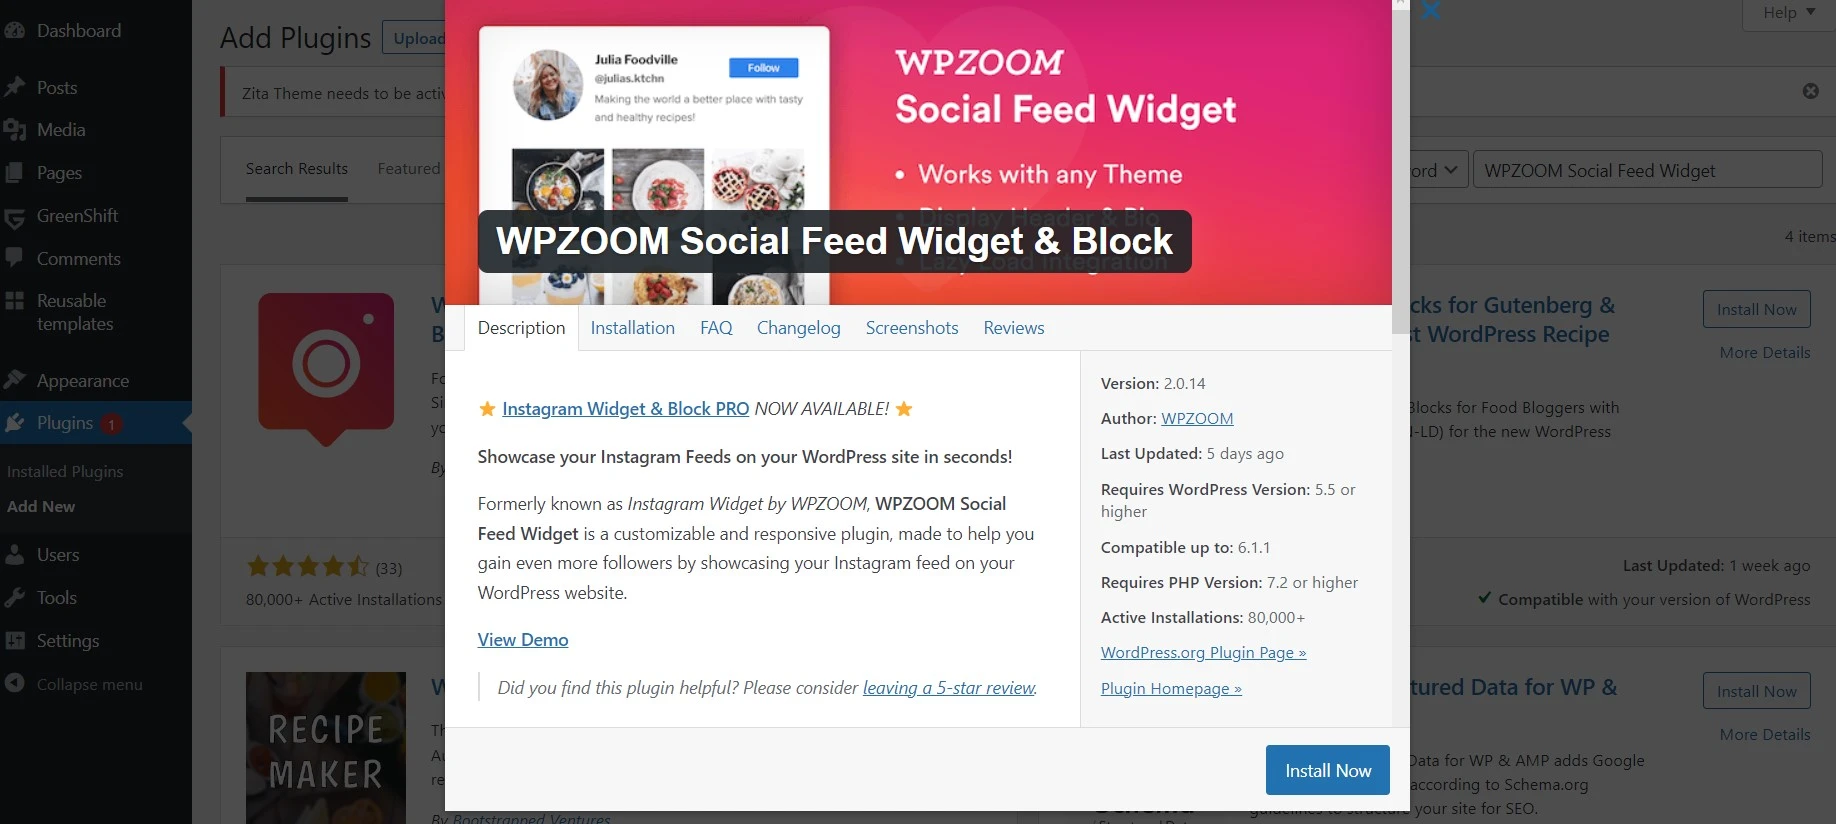 Wpzoom social feed widget plugin for wordpress